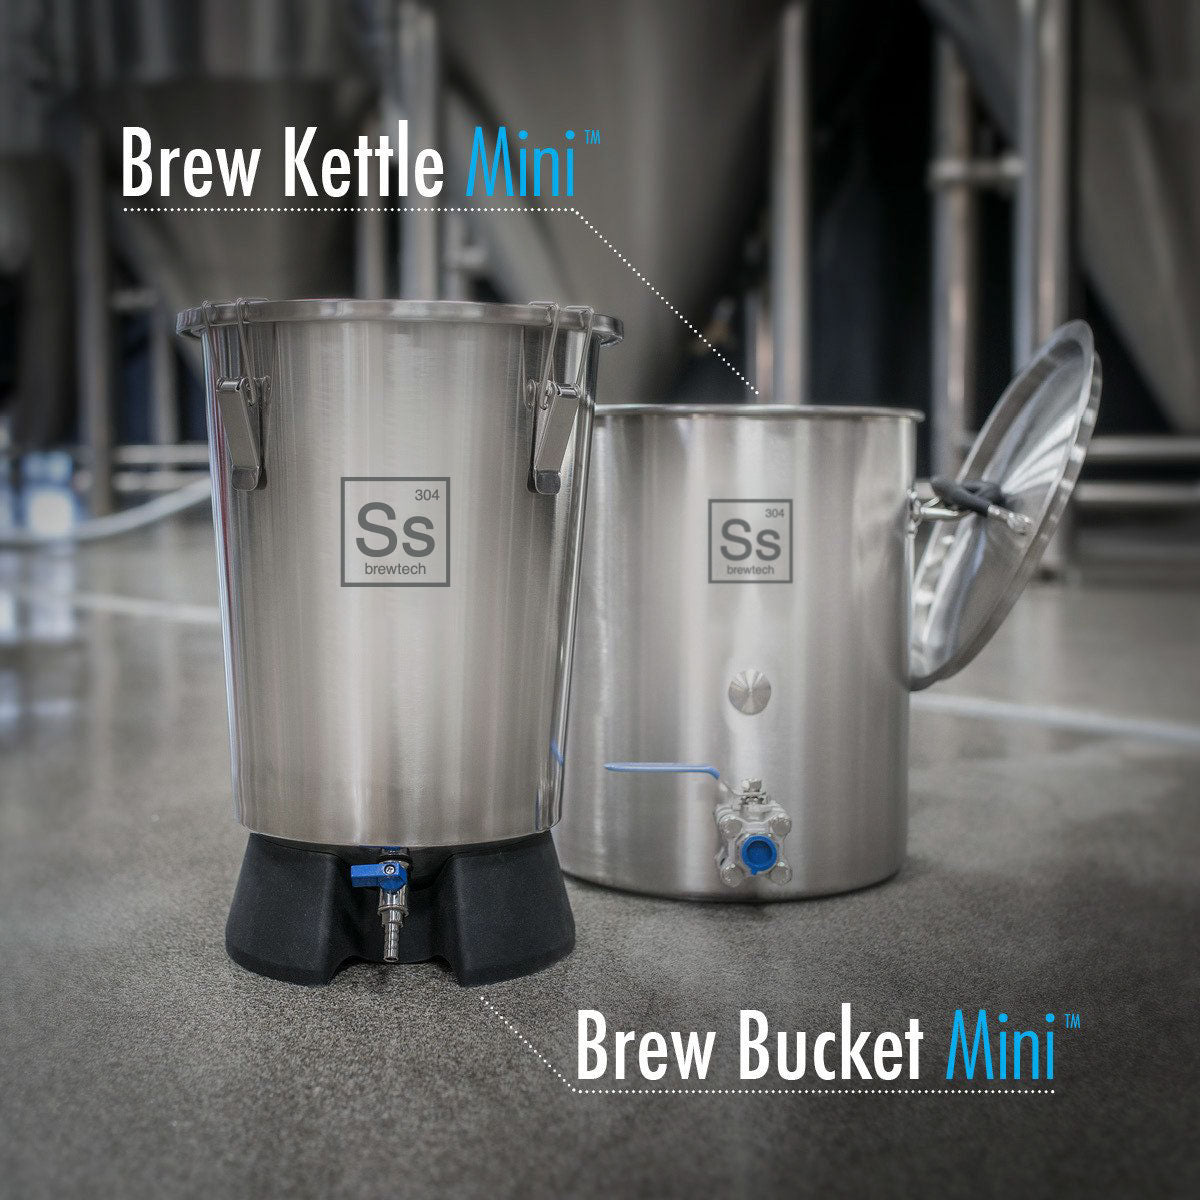 5.5 gal  Brew Kettle Mini - Ss Brewtech